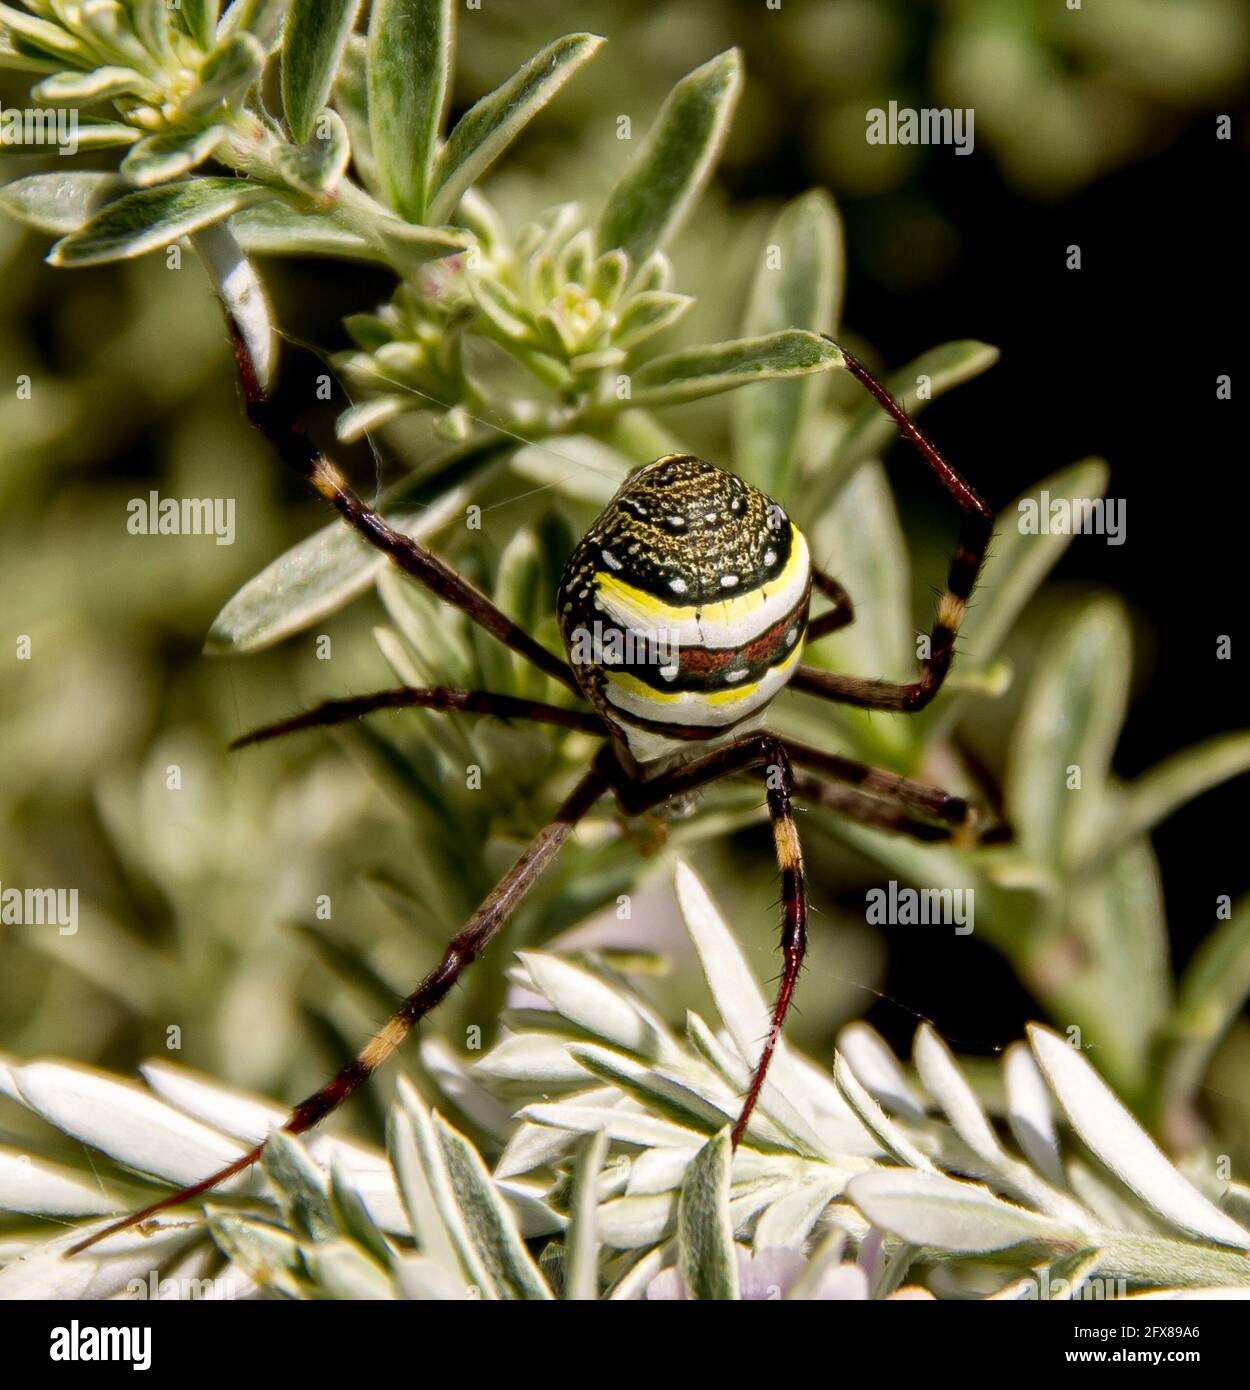 Female St Andrews Cross spider (Argiope keyserlingi) starting to make her web in green foliage. Distinct patterns. Garden in Queensland, A.ustralia. Stock Photo